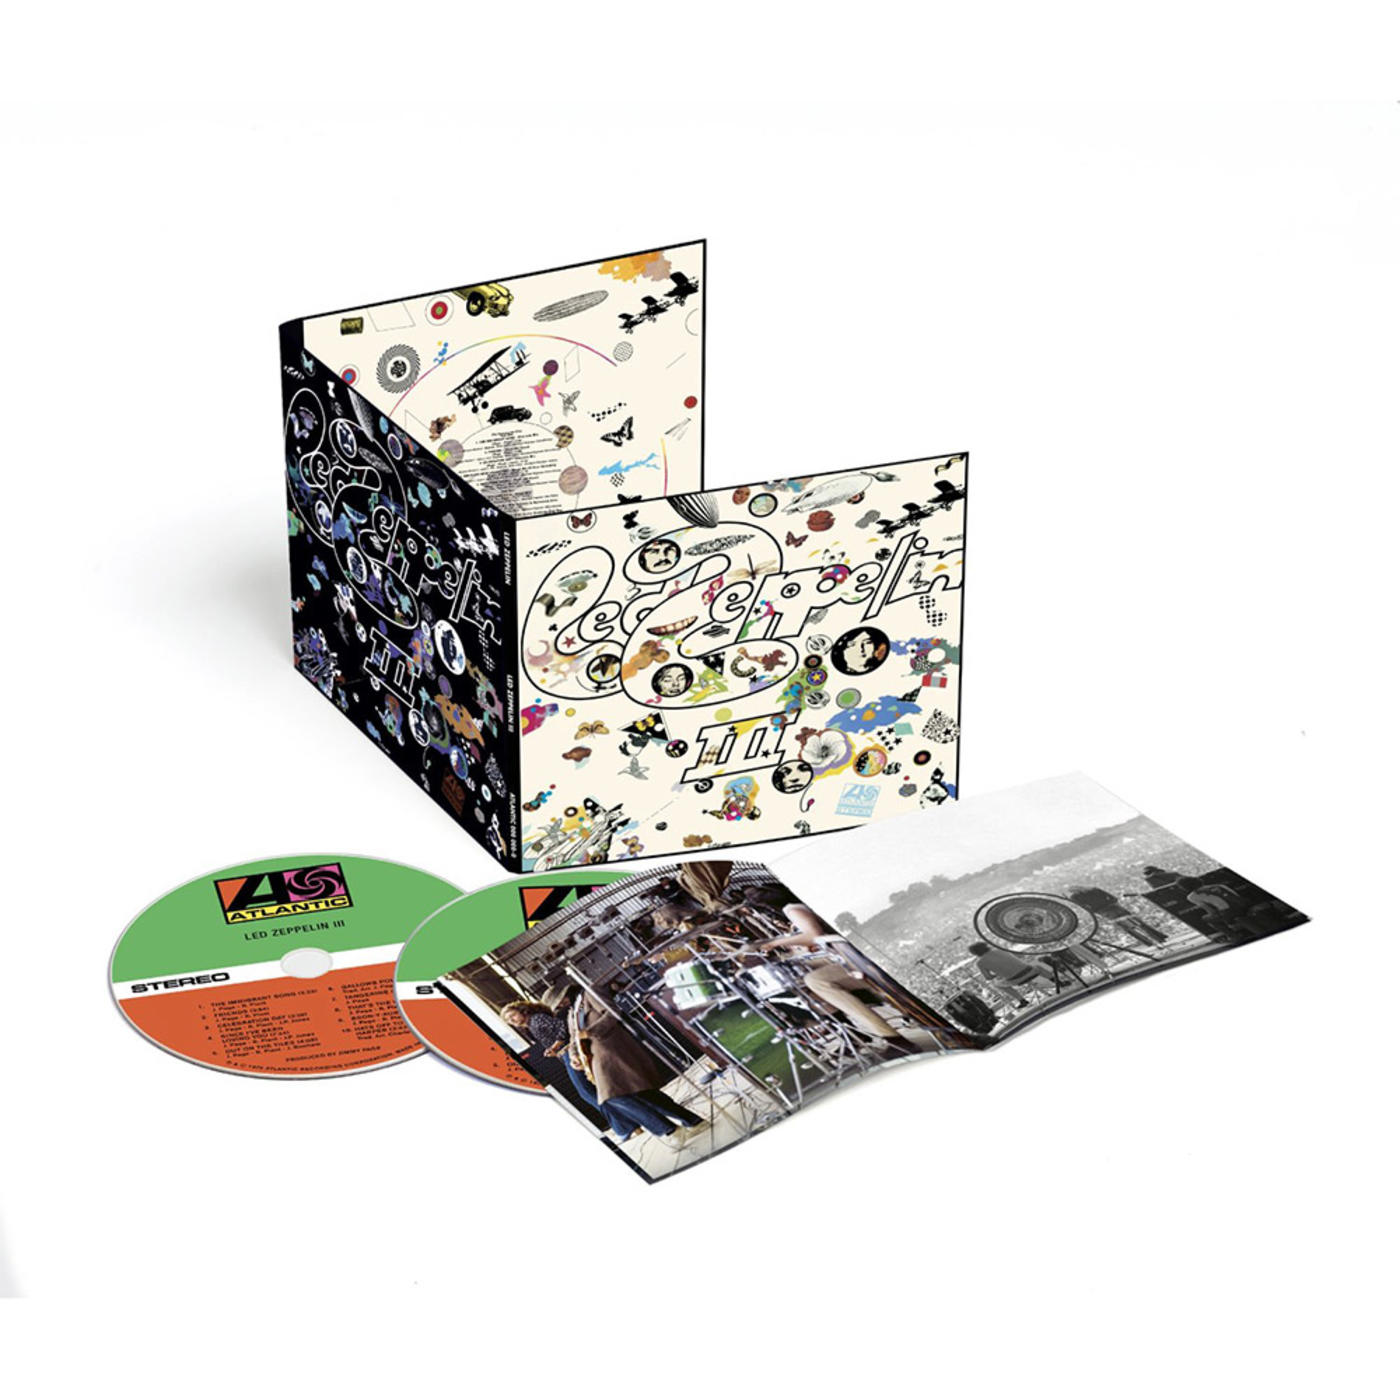 Led Zeppelin III - 2CD Deluxe Edition